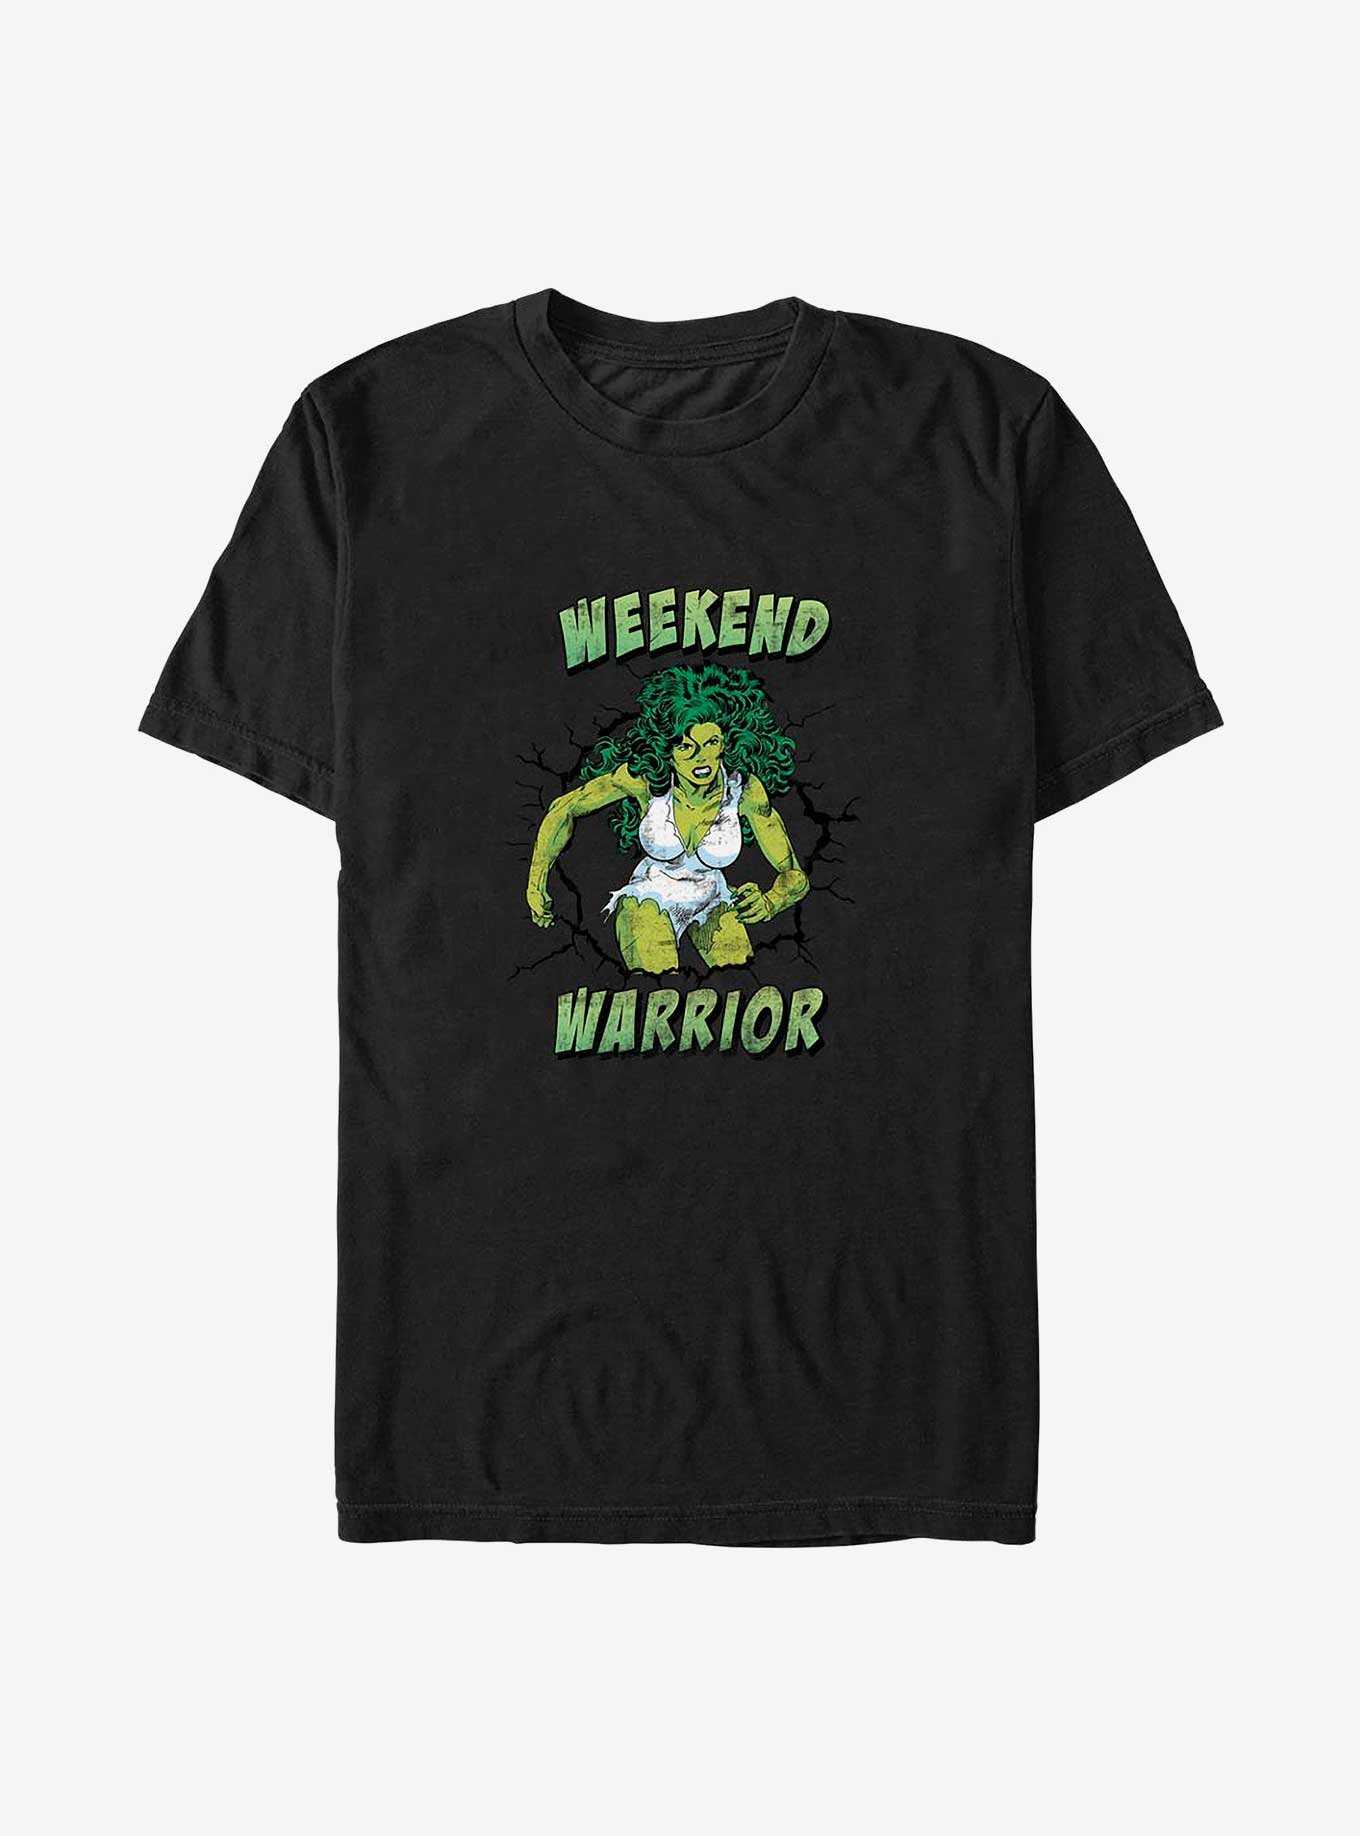 Marvel She-Hulk Weekend Warrior T-Shirt, , hi-res